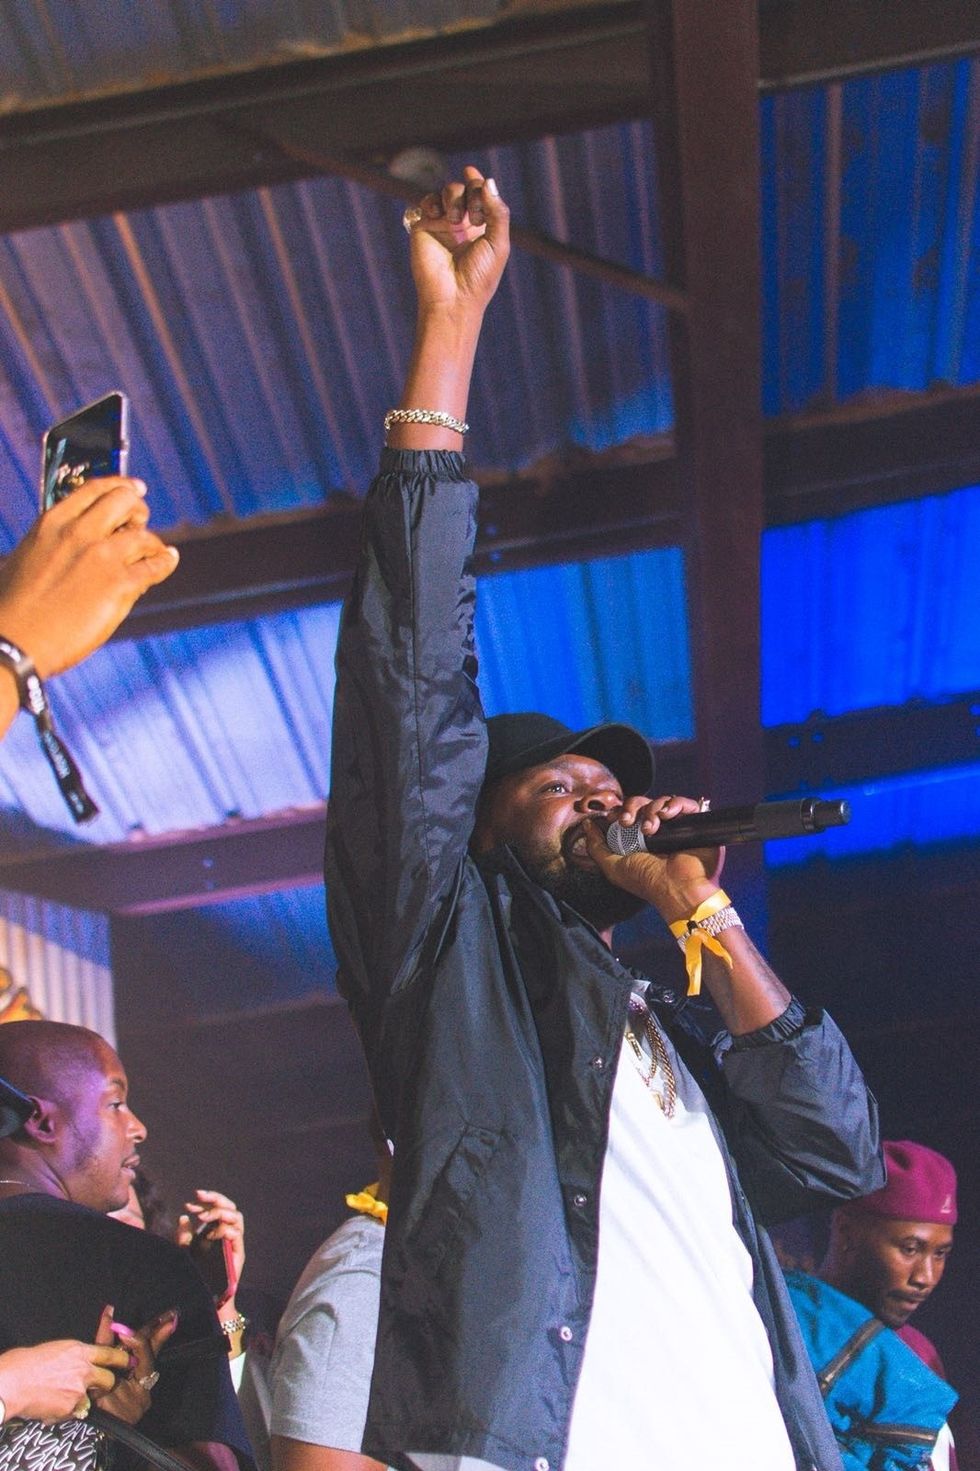 Kranium: 'Caribbean Music and Dancehall Have Everlasting Power'